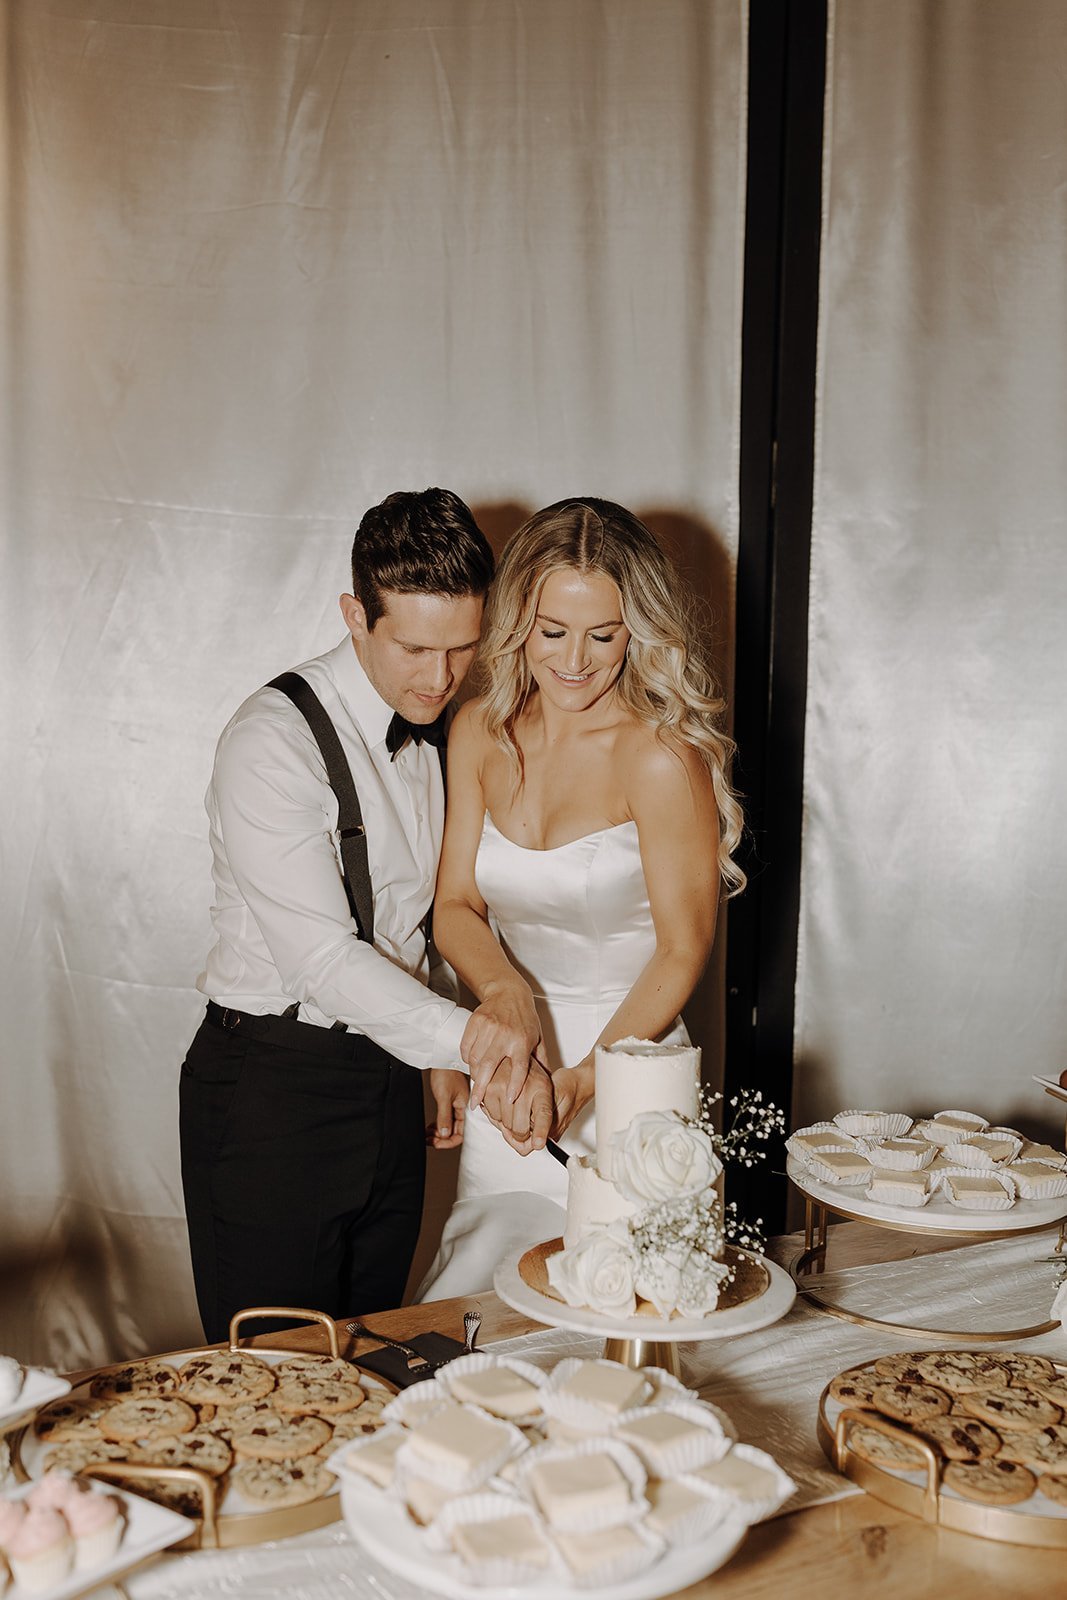 Bride and groom cutting white wedding cake at desert wedding reception